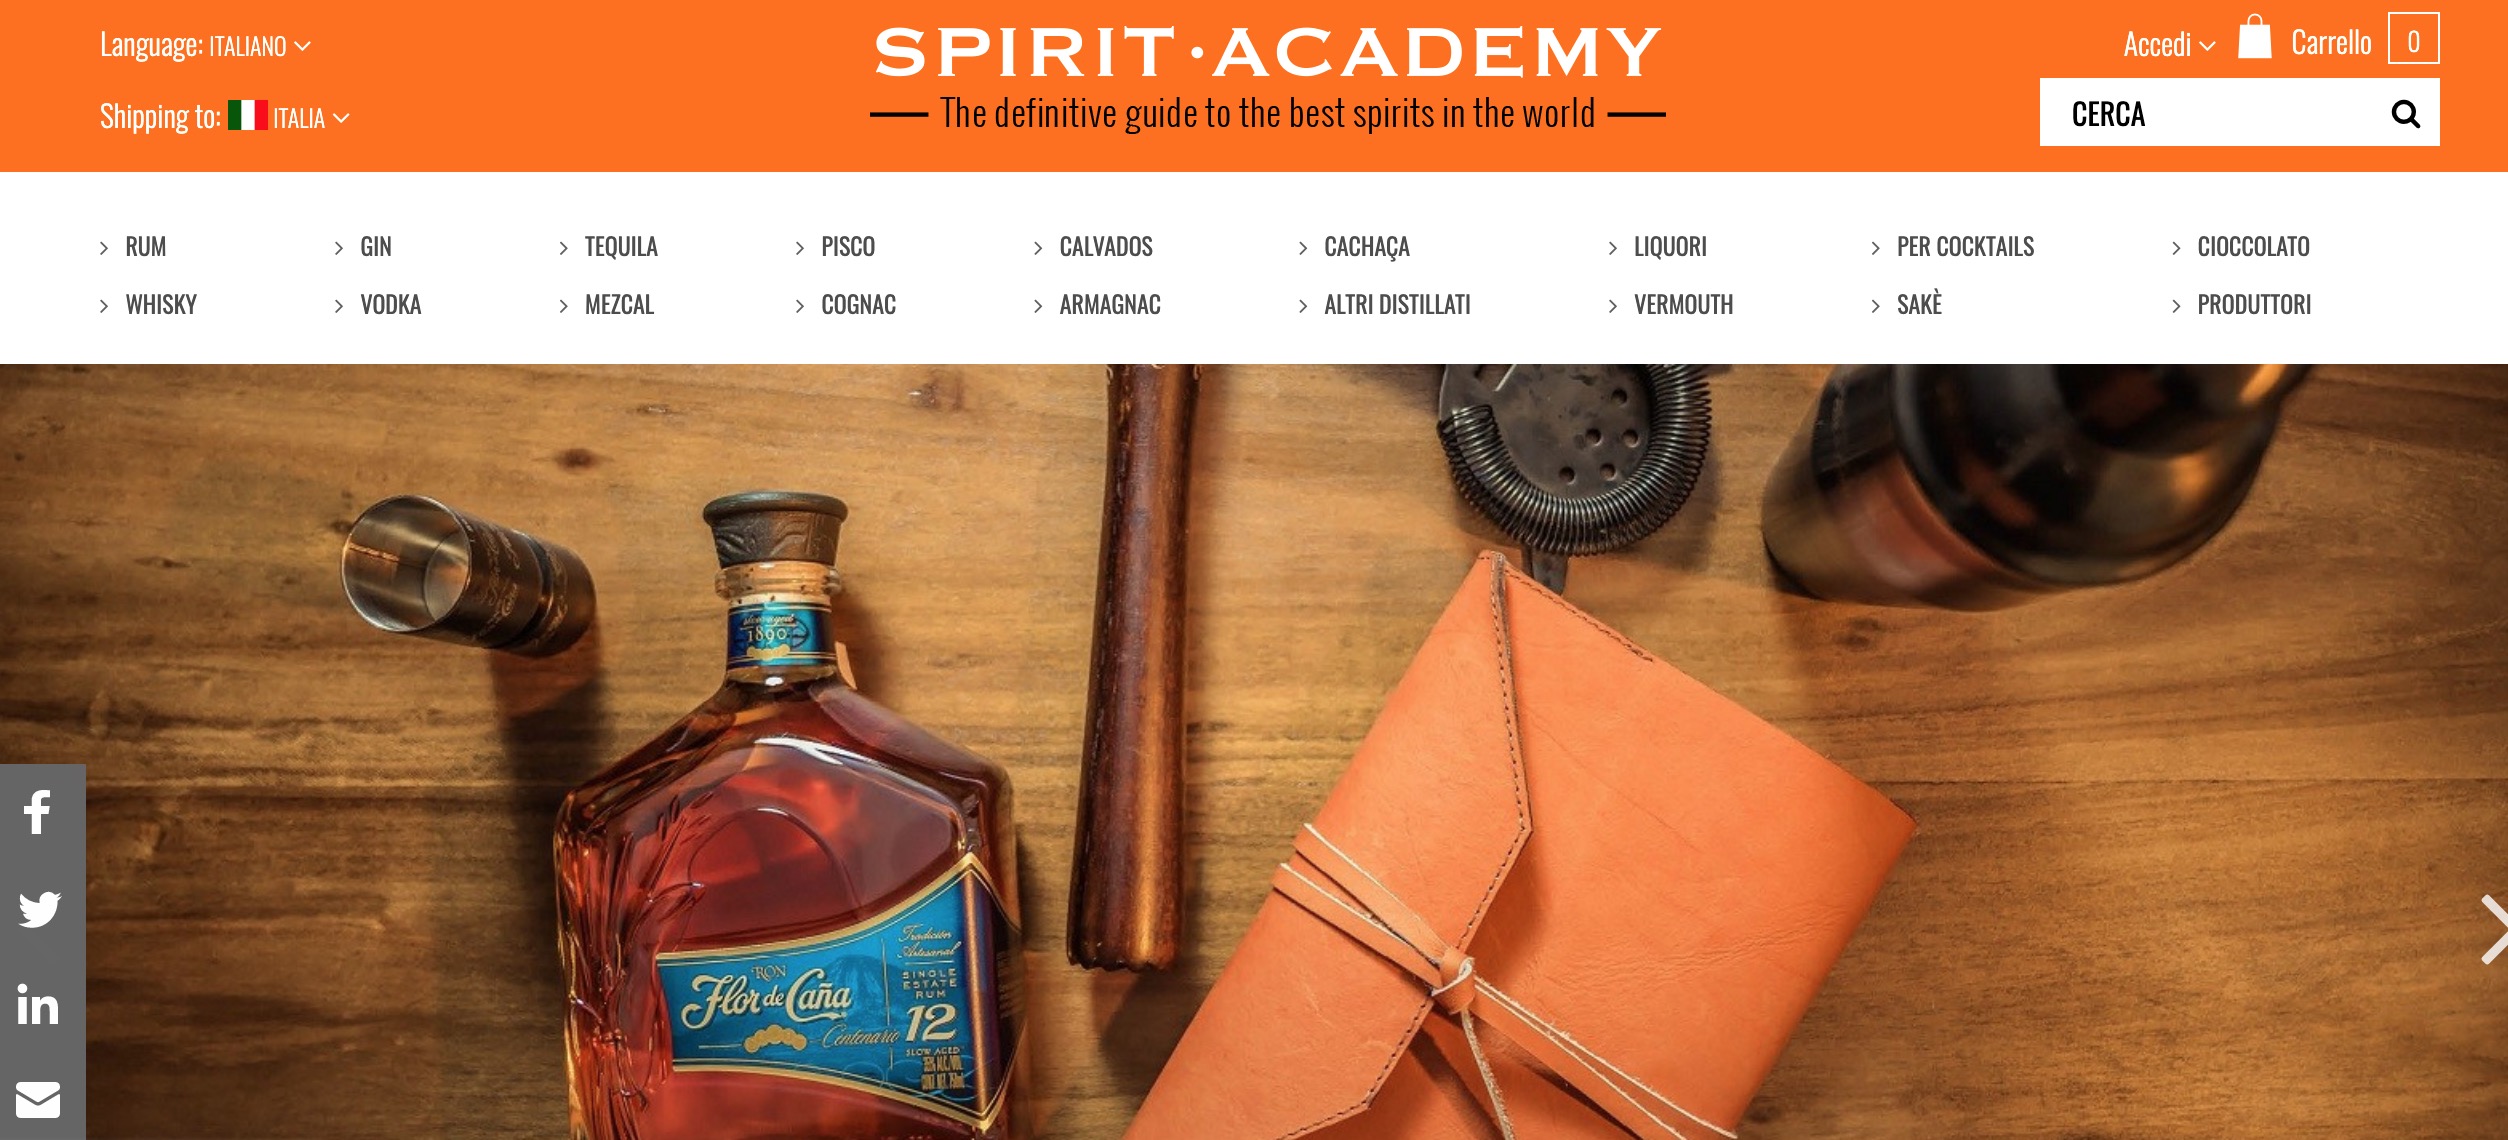 ecommerce_distillati_spirit_academy